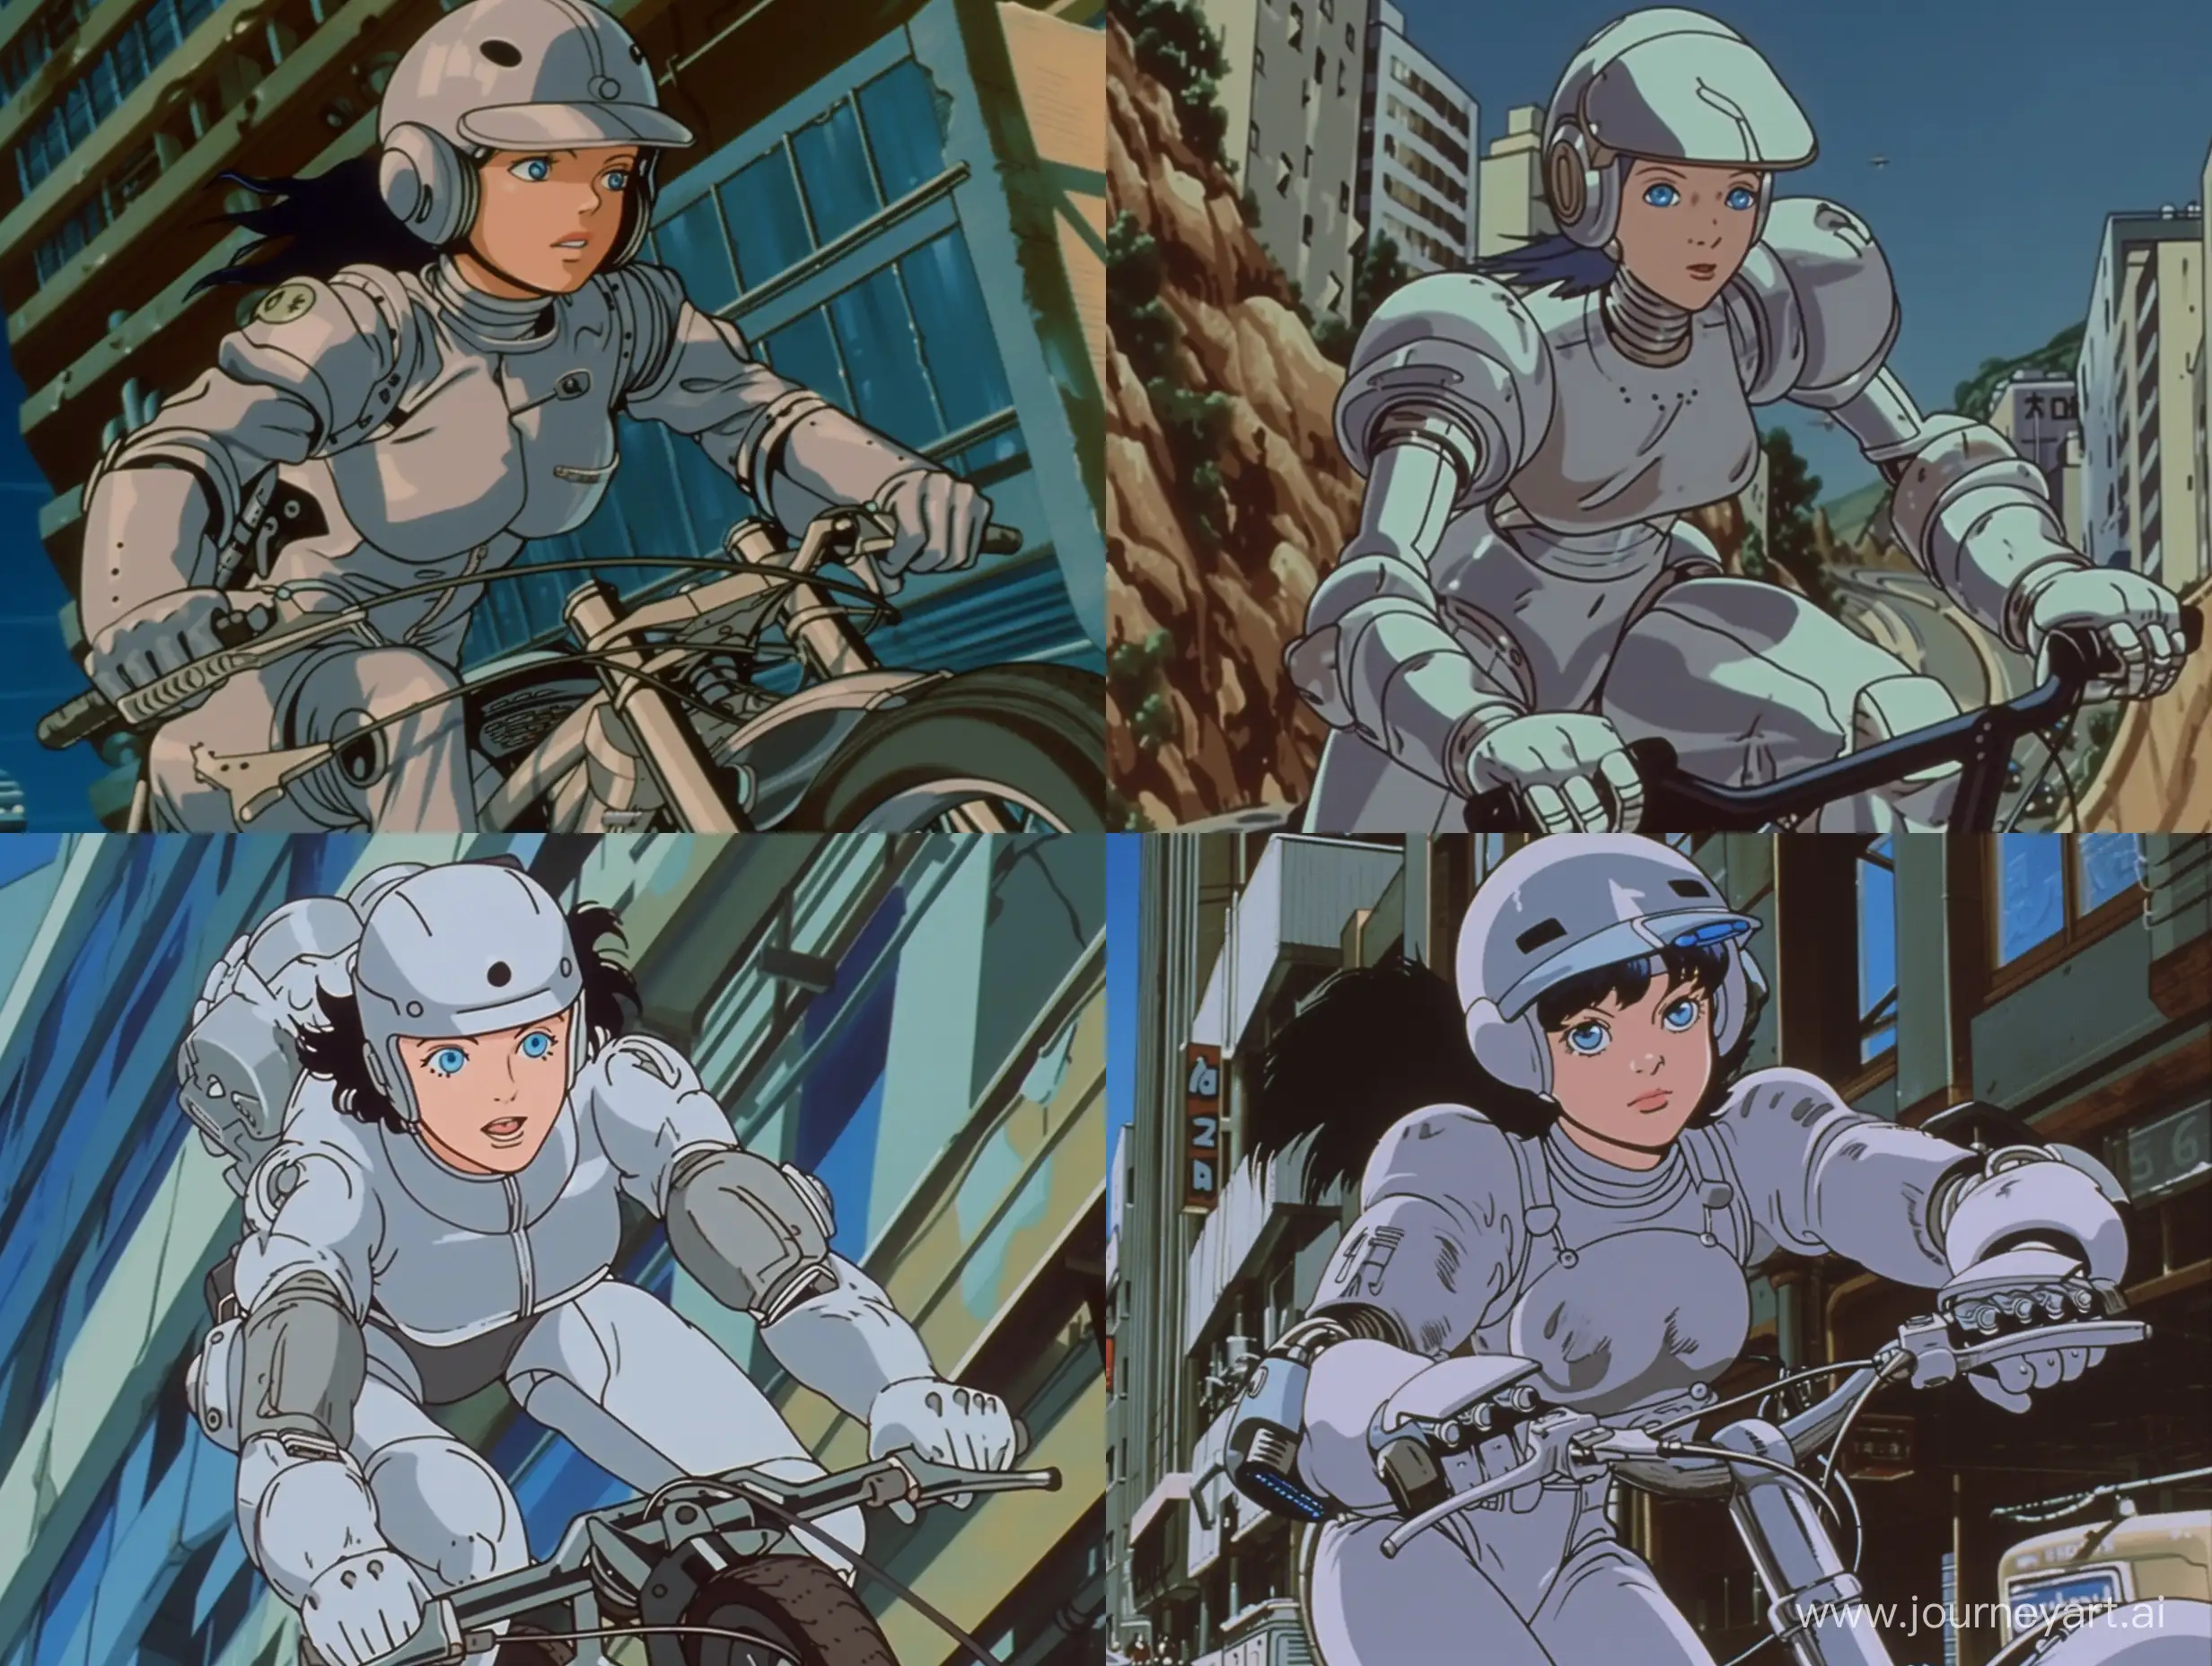 Silver-Cyborg-Woman-Riding-Bike-Nostalgic-90s-Anime-Scene-from-Akira-1988